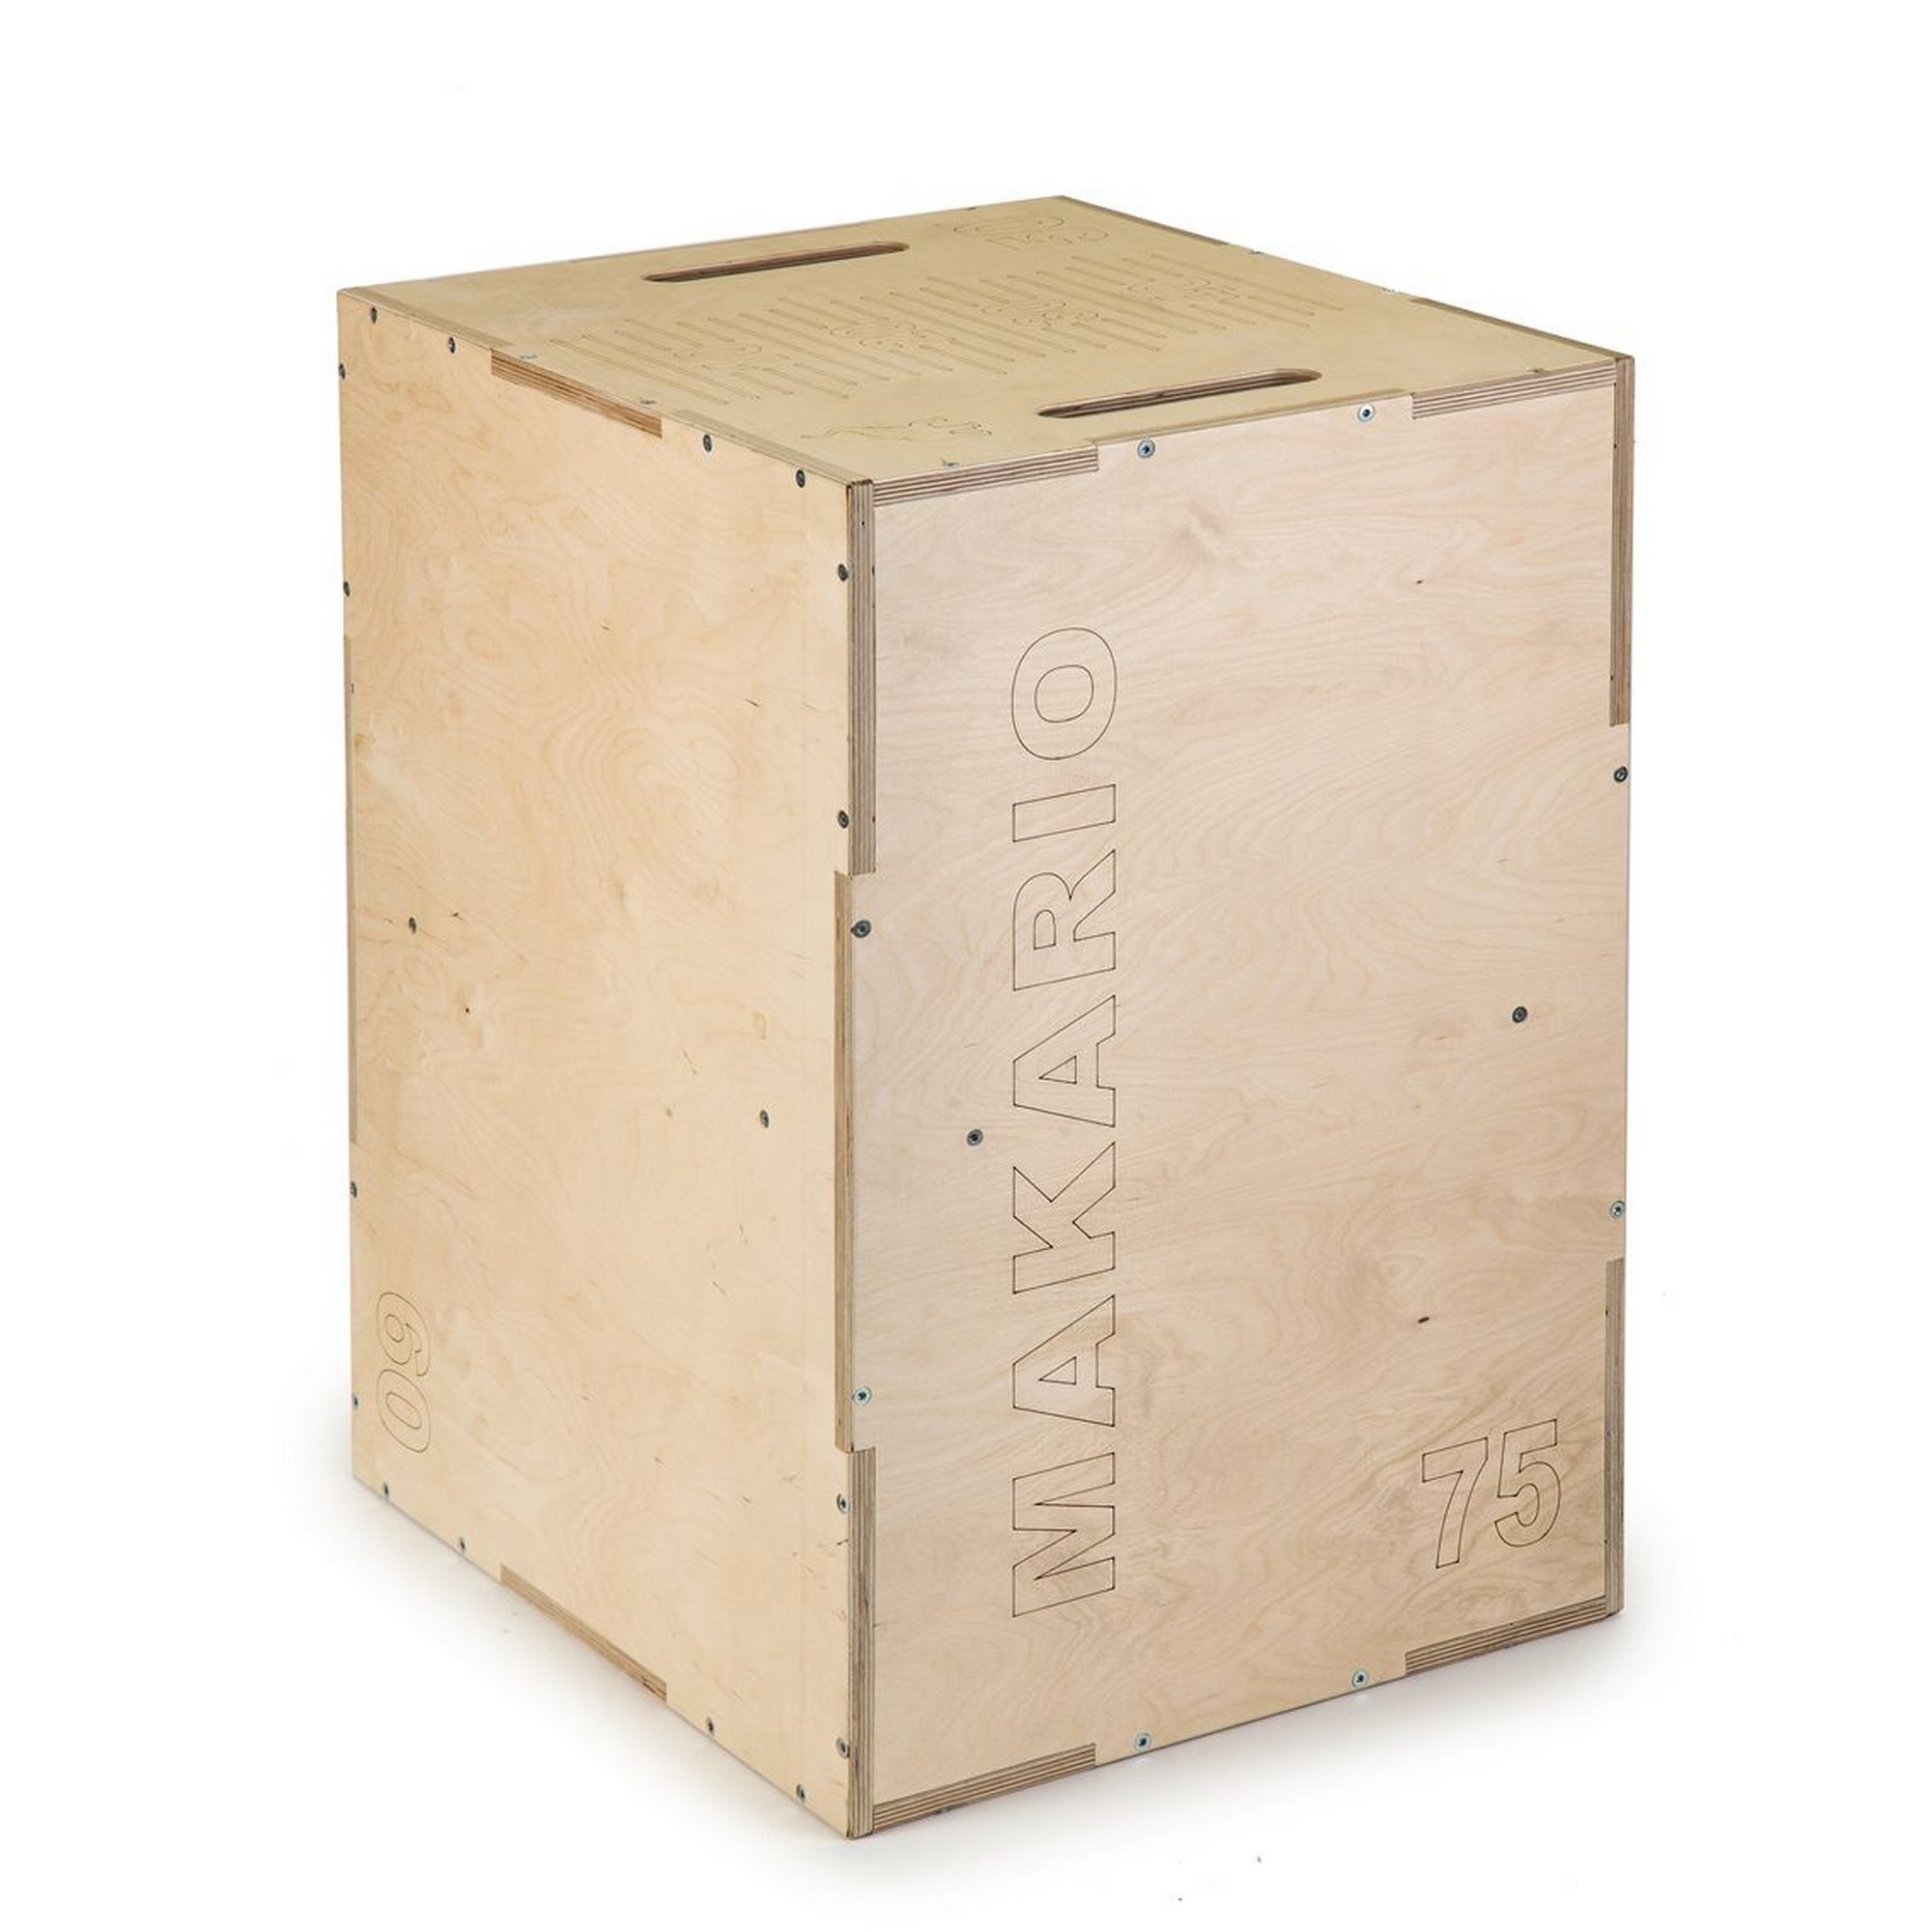 Плиобокс Makario (тумба для запрыгивания), с разметкой шкалы наклона (деревянная 50-60-75см) МА-Т1 2000_2000